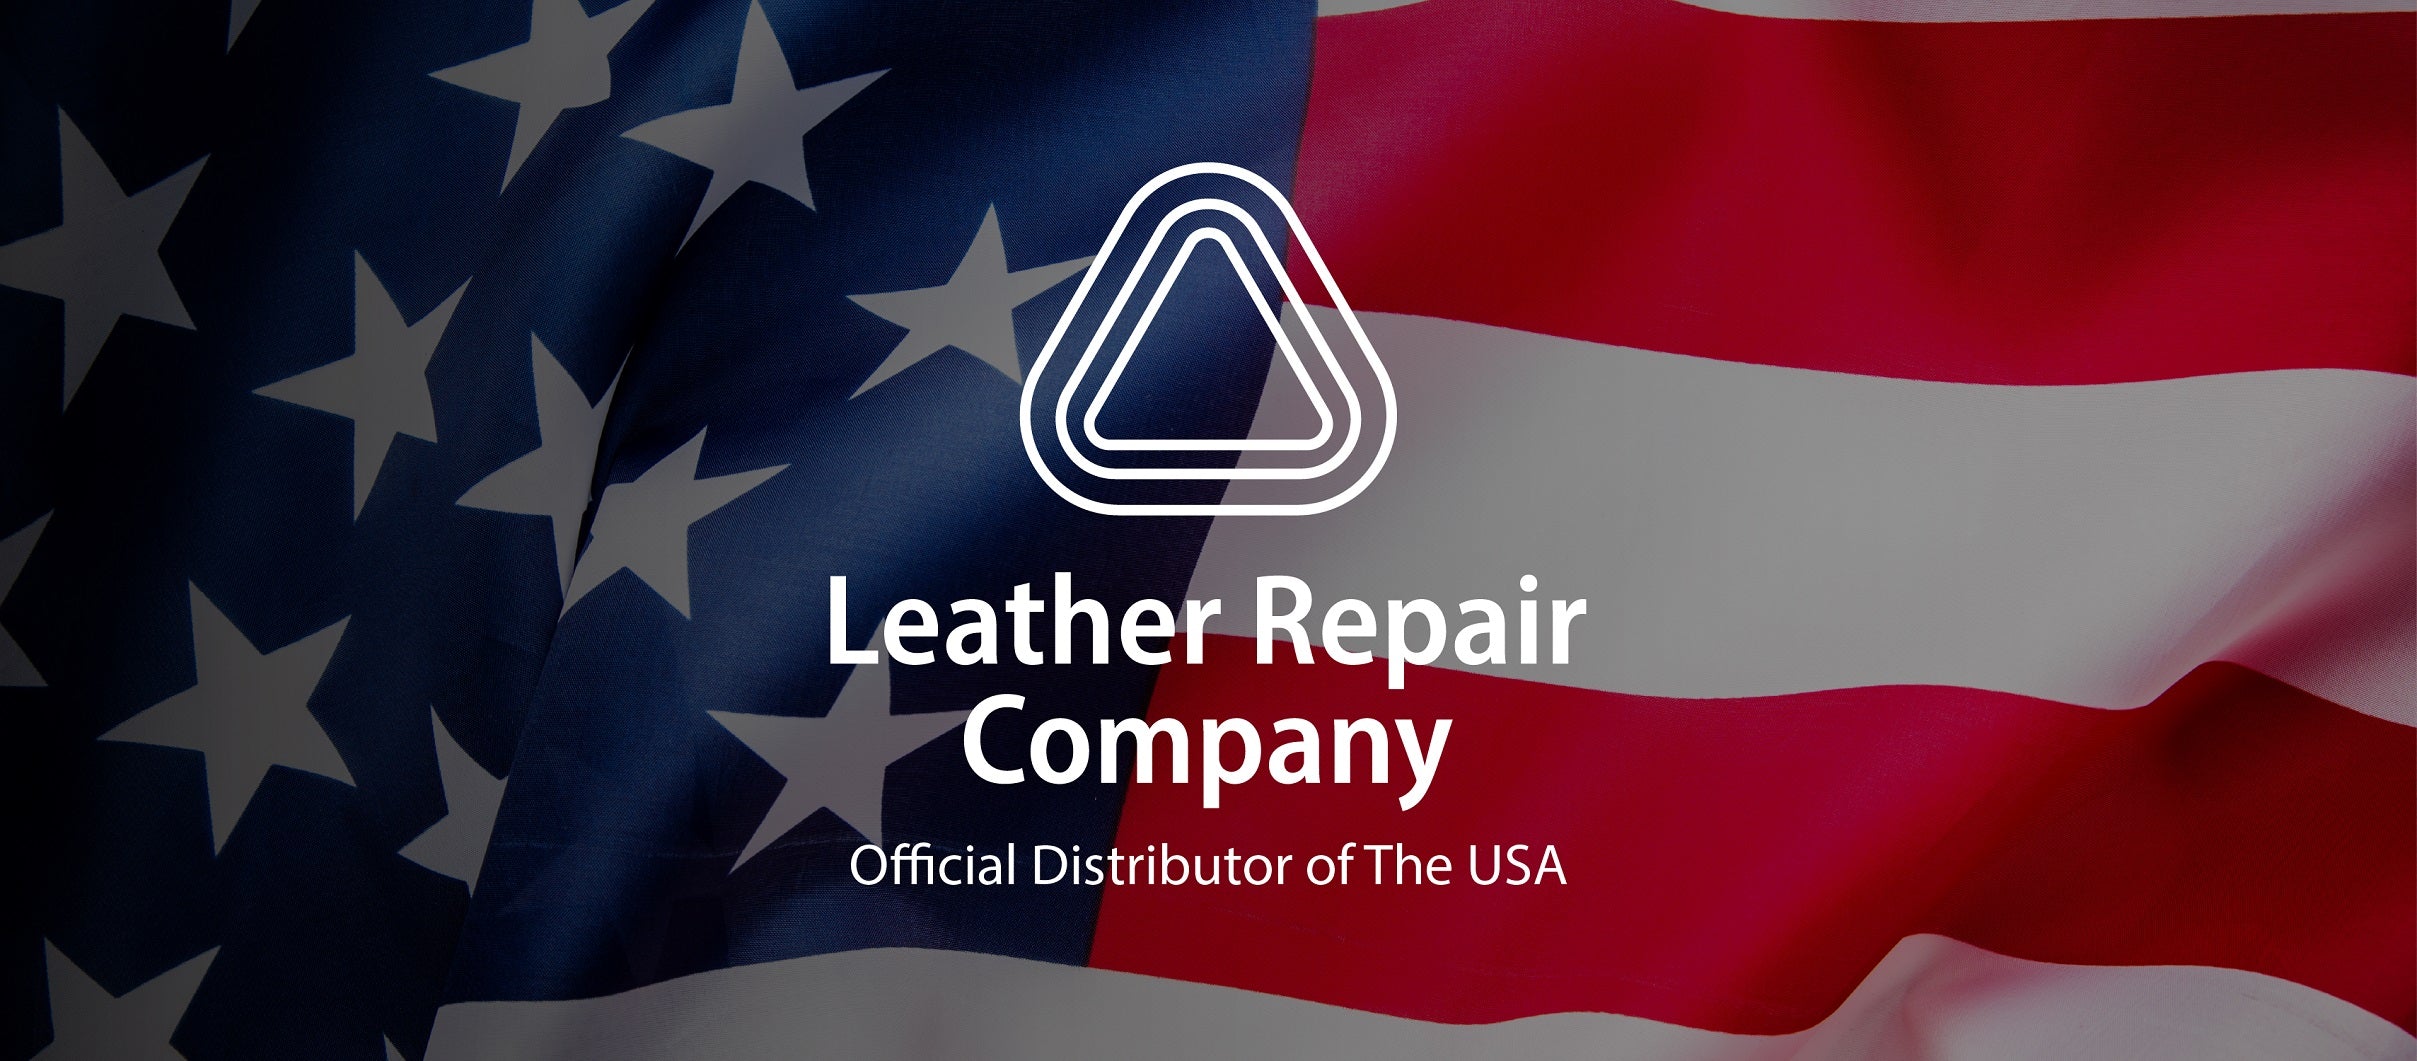 Leather Repair Company USA